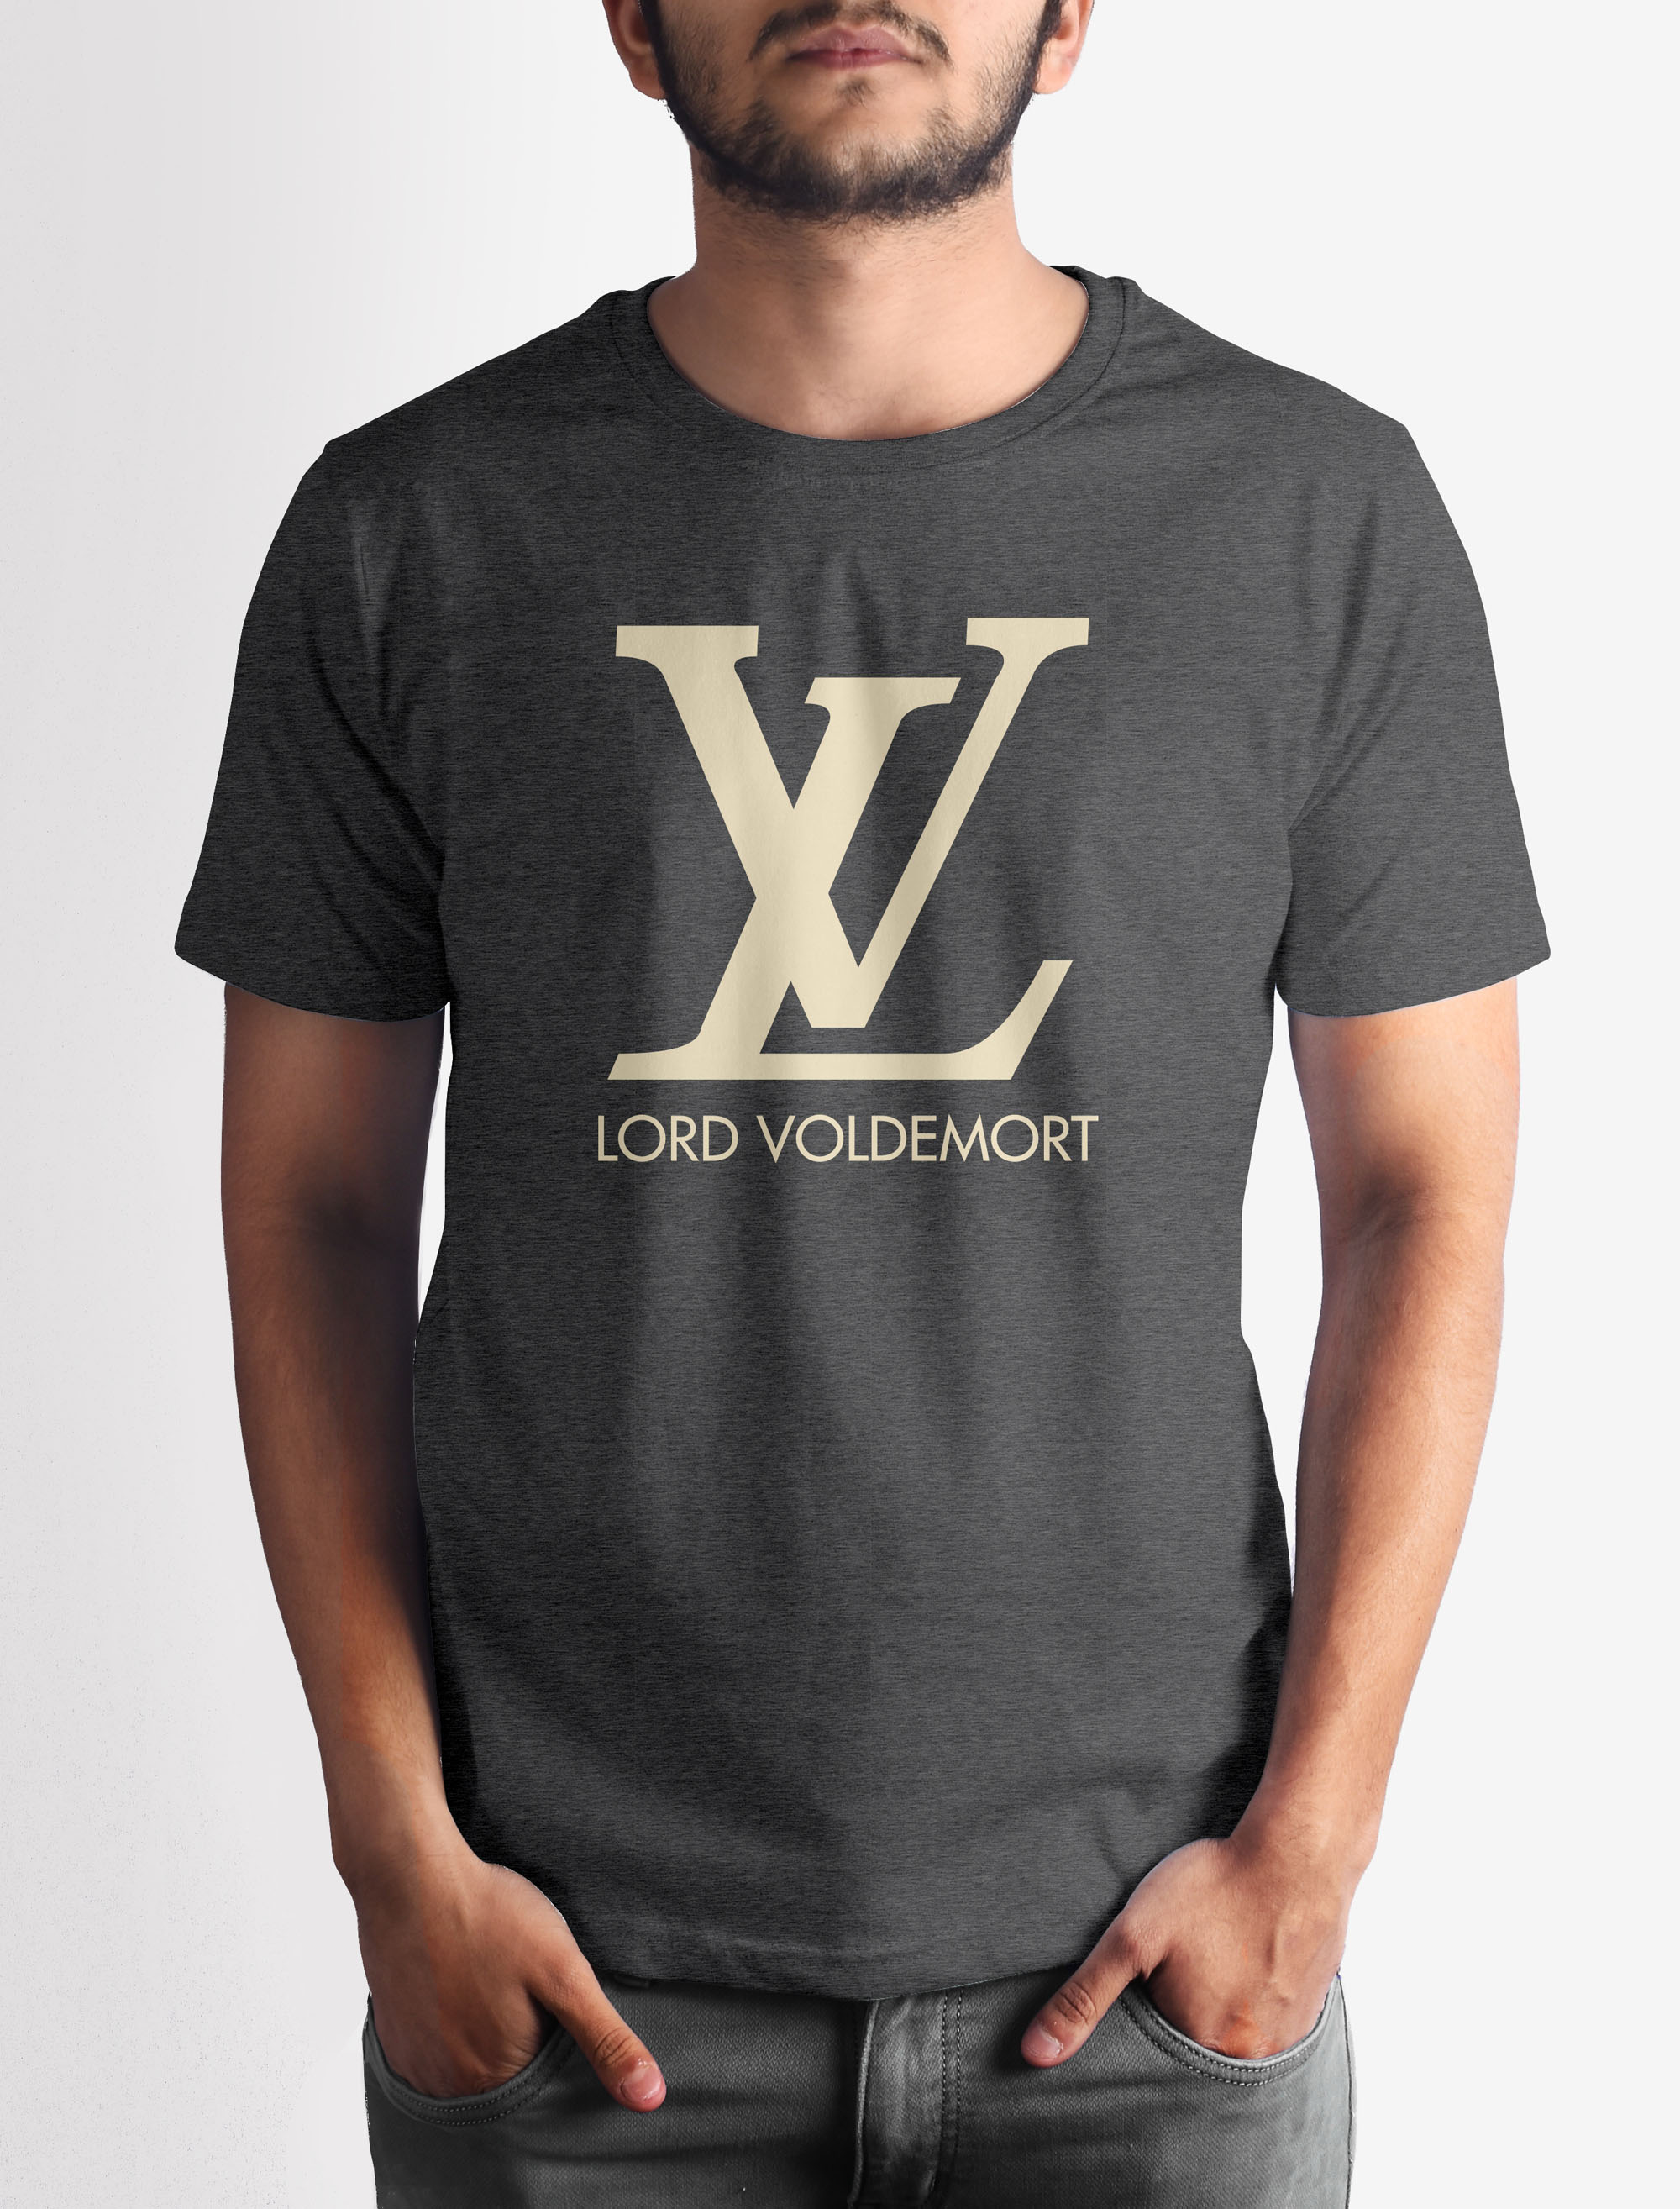 Louis Vuitton Lord Voldemort LV Shirt - Vintagenclassic Tee